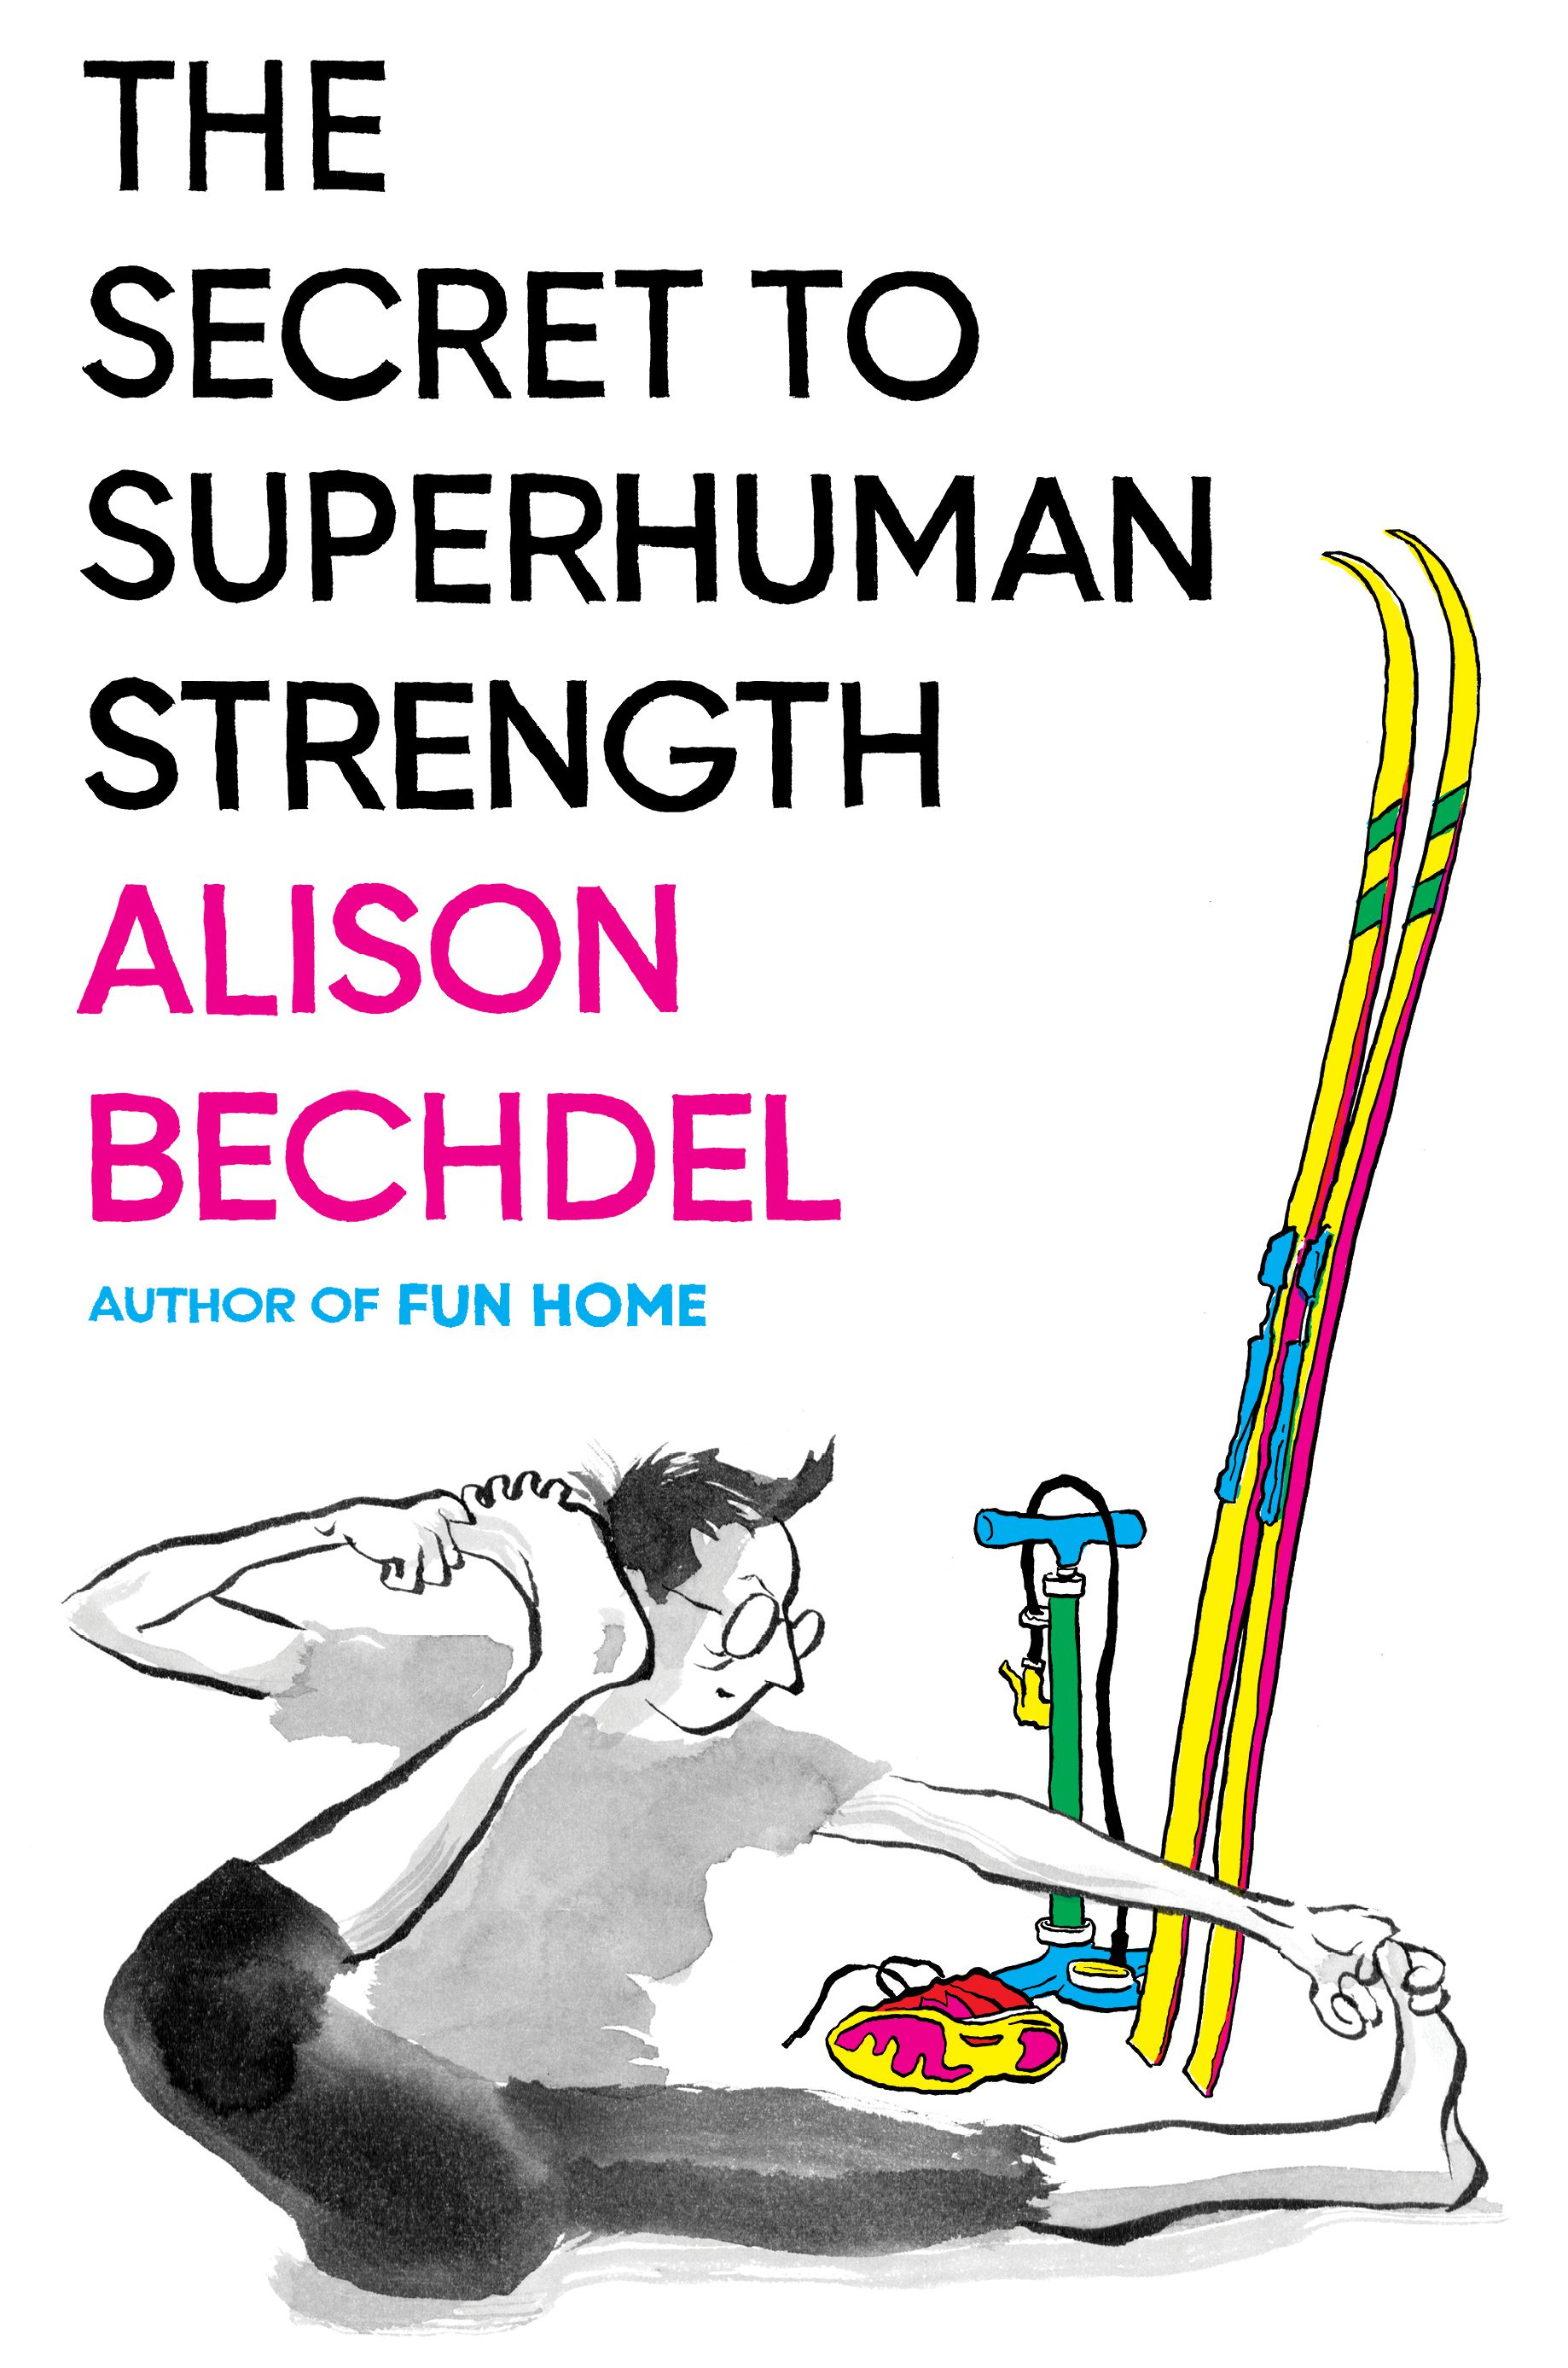 The Secret to Superhuman Strength book cover